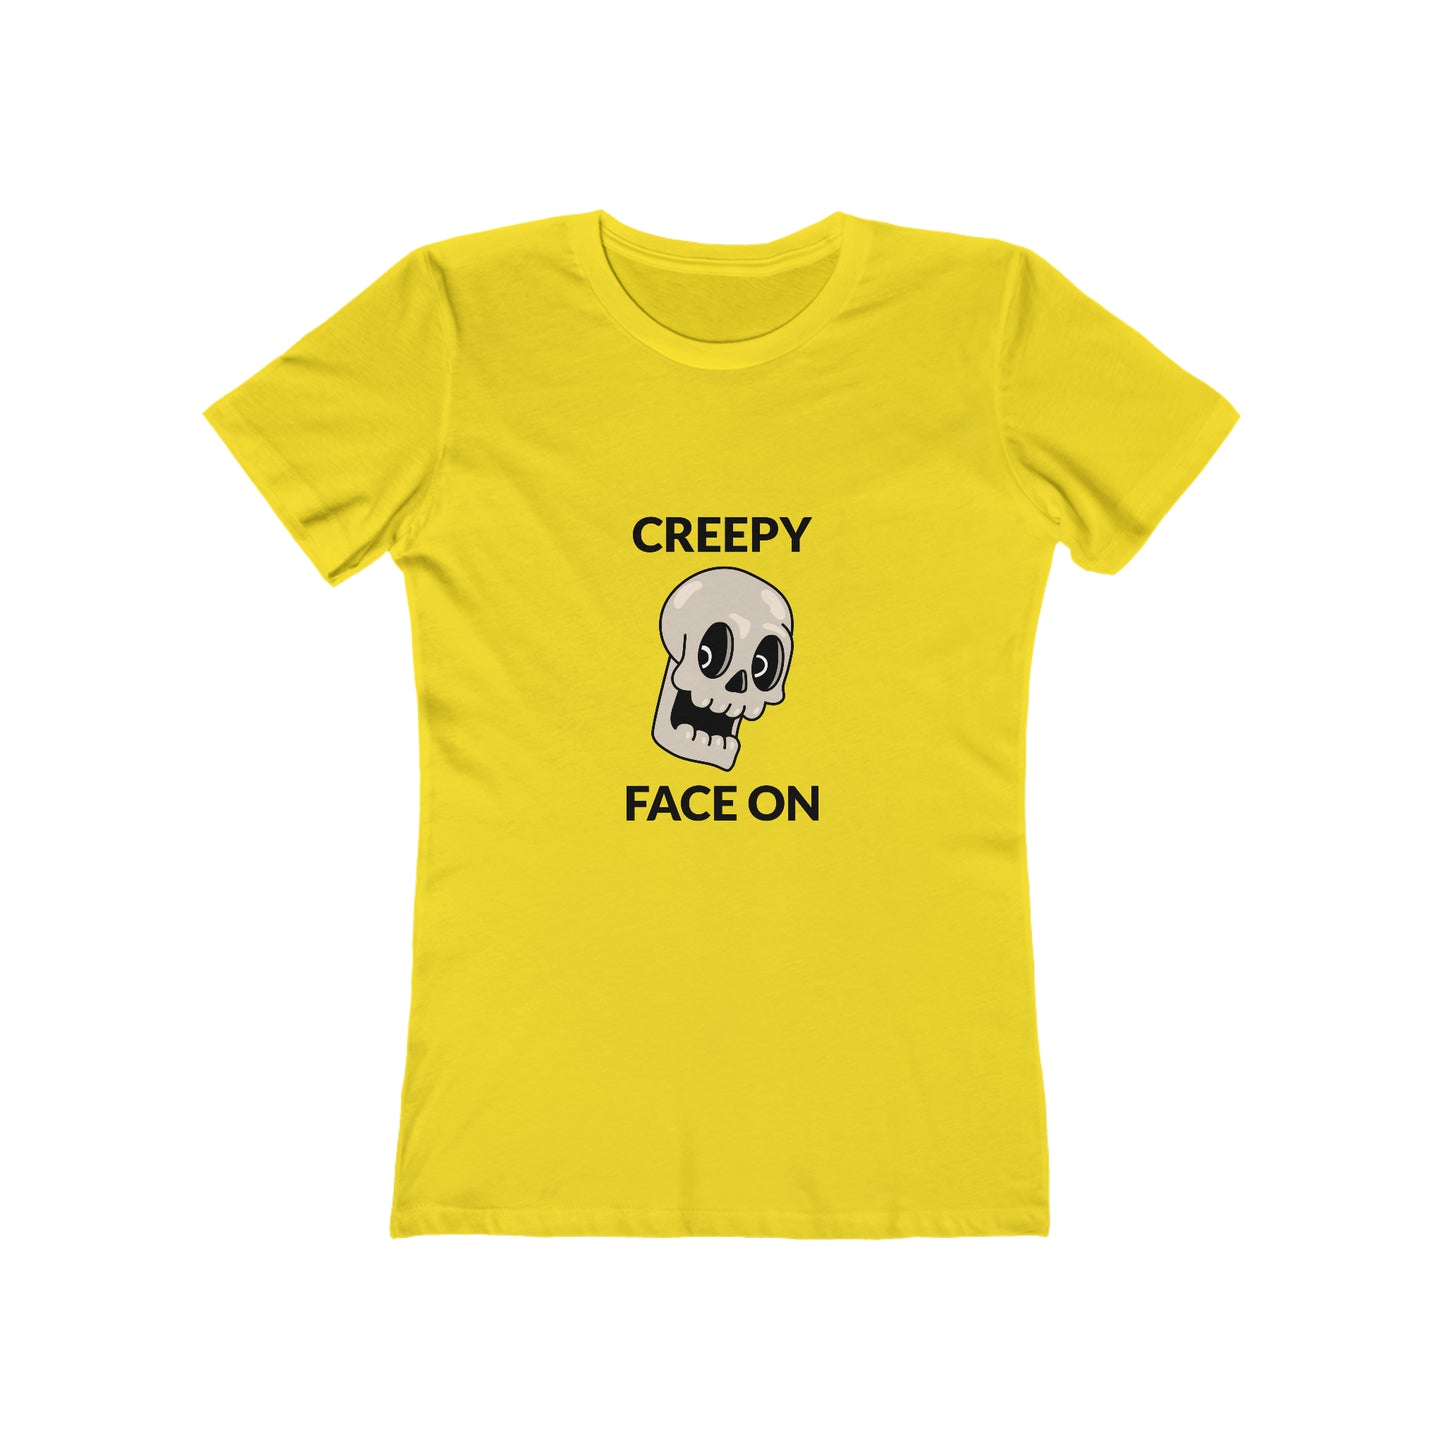 Creepy Face On - Women's T-shirt